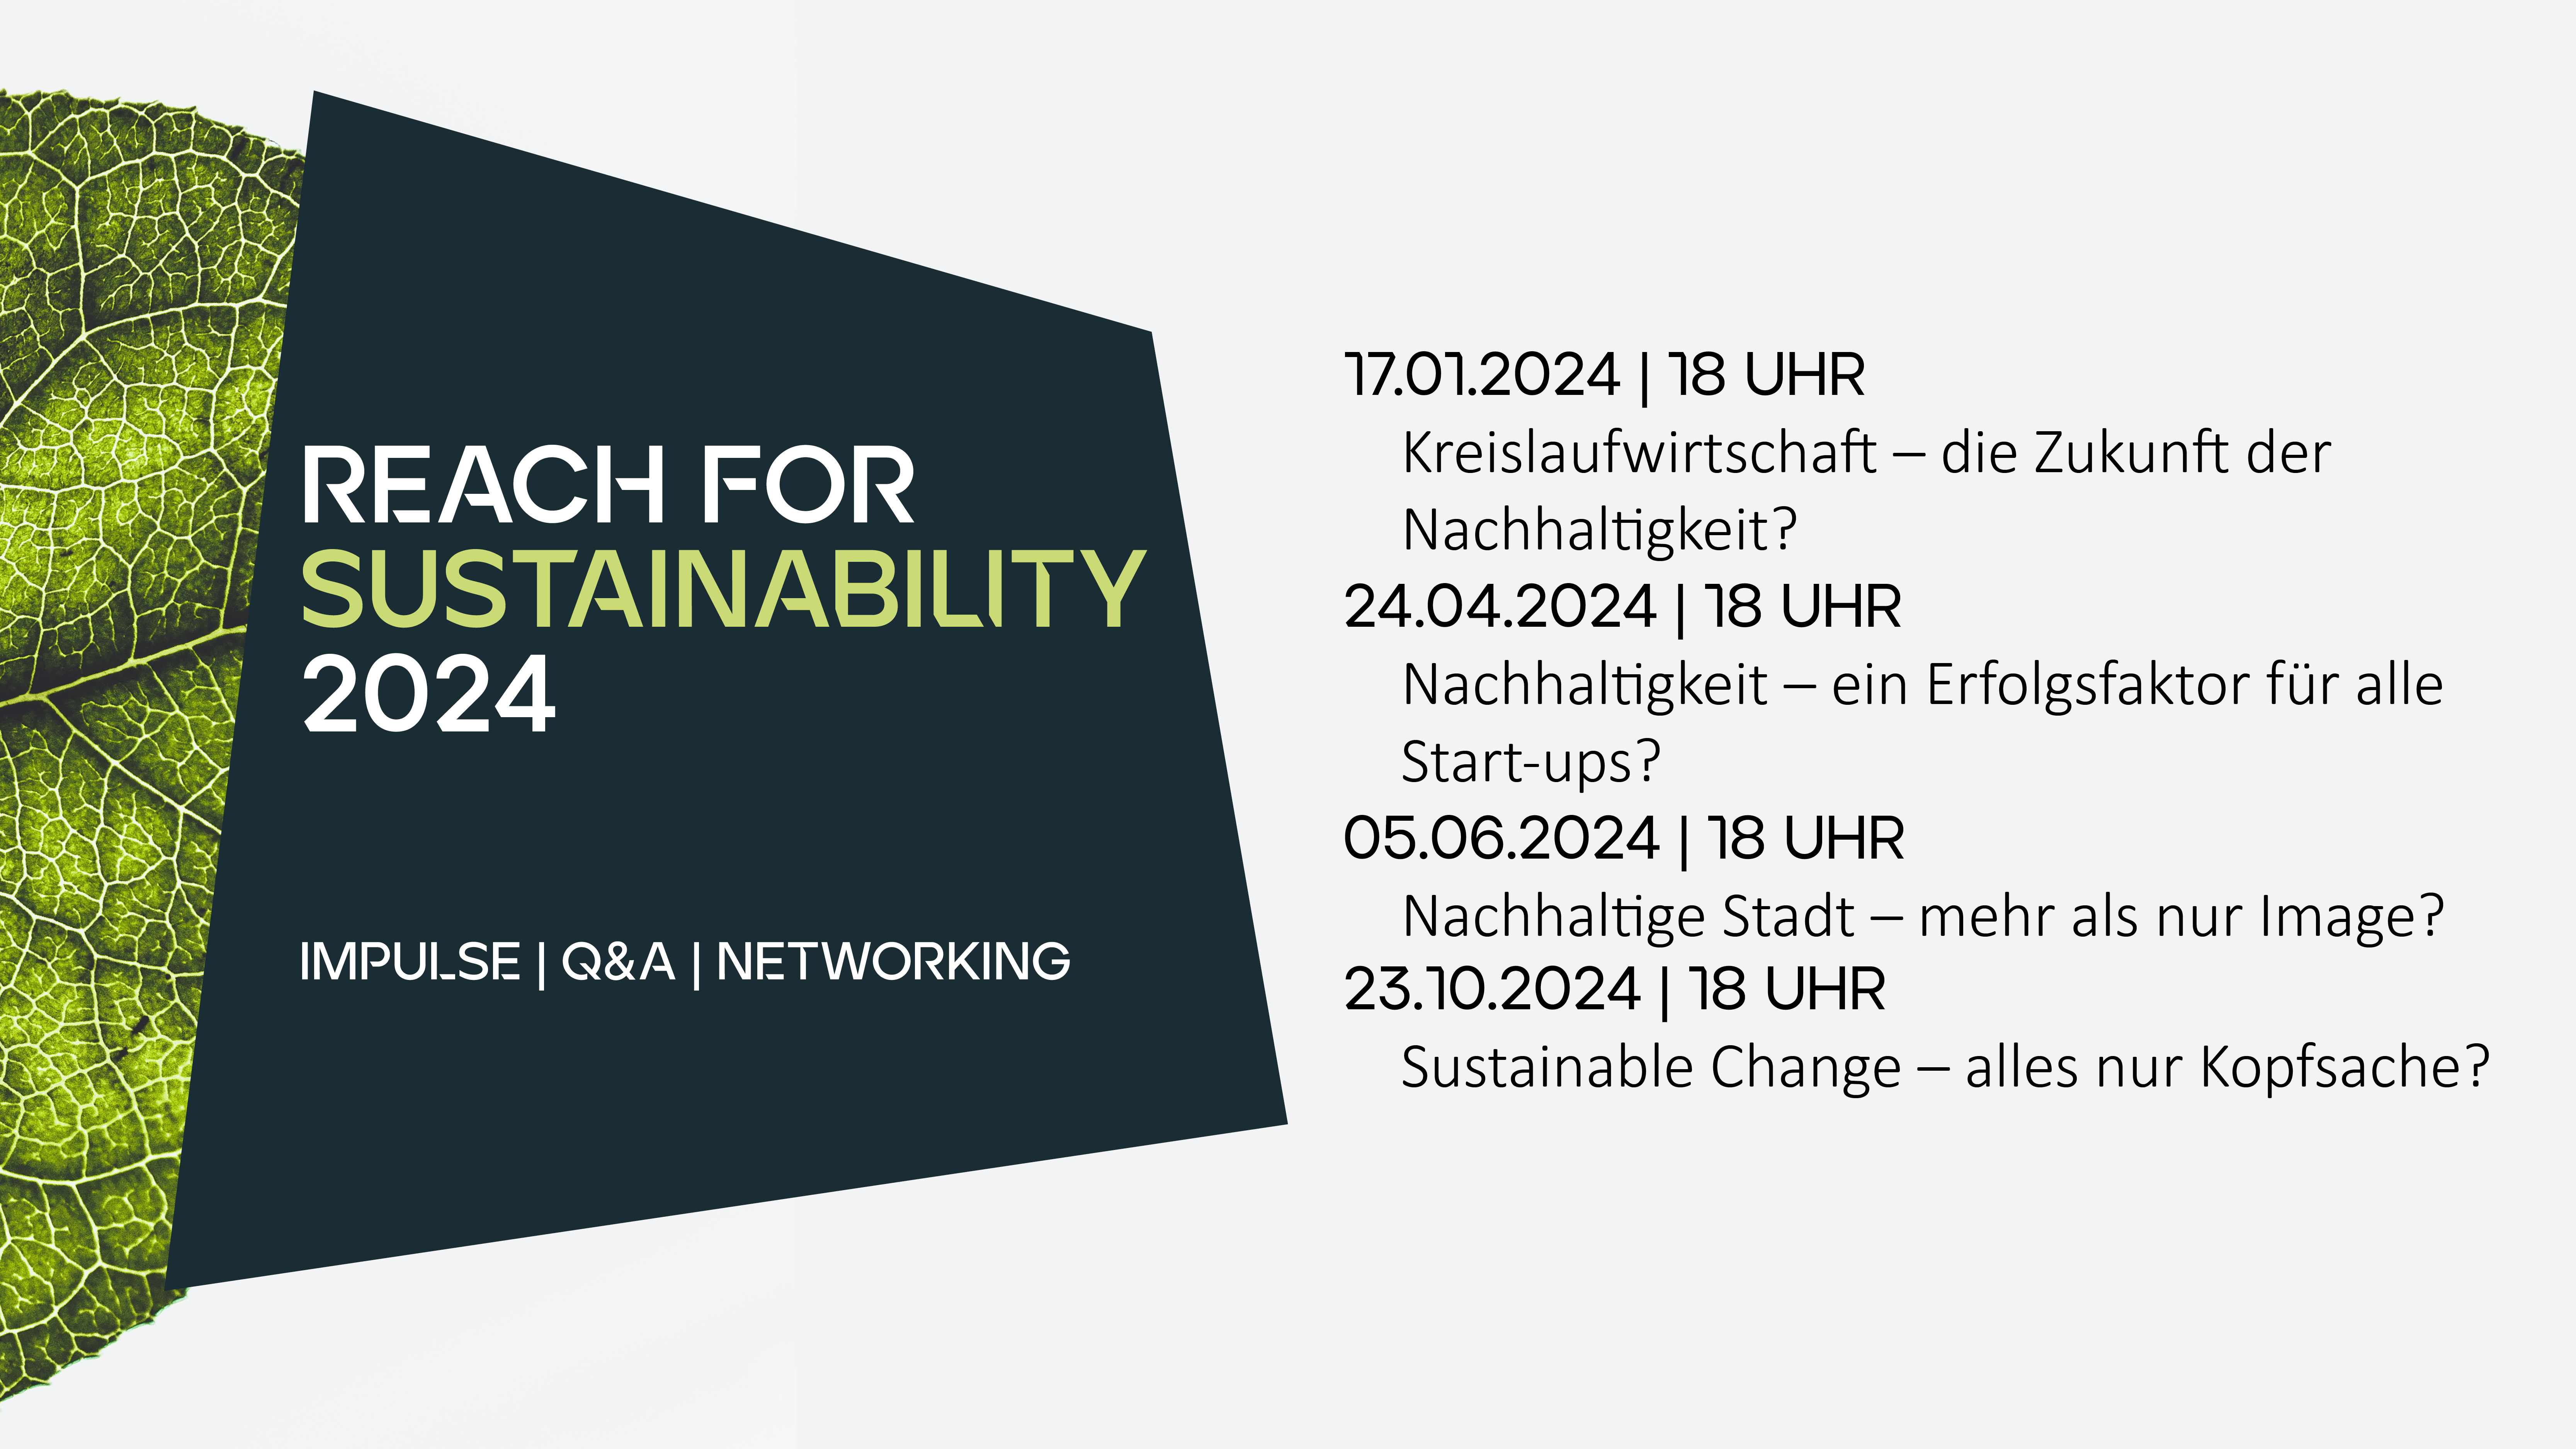 REACH for Sustainability: Sustainable Change - alles nur Kopfsache?